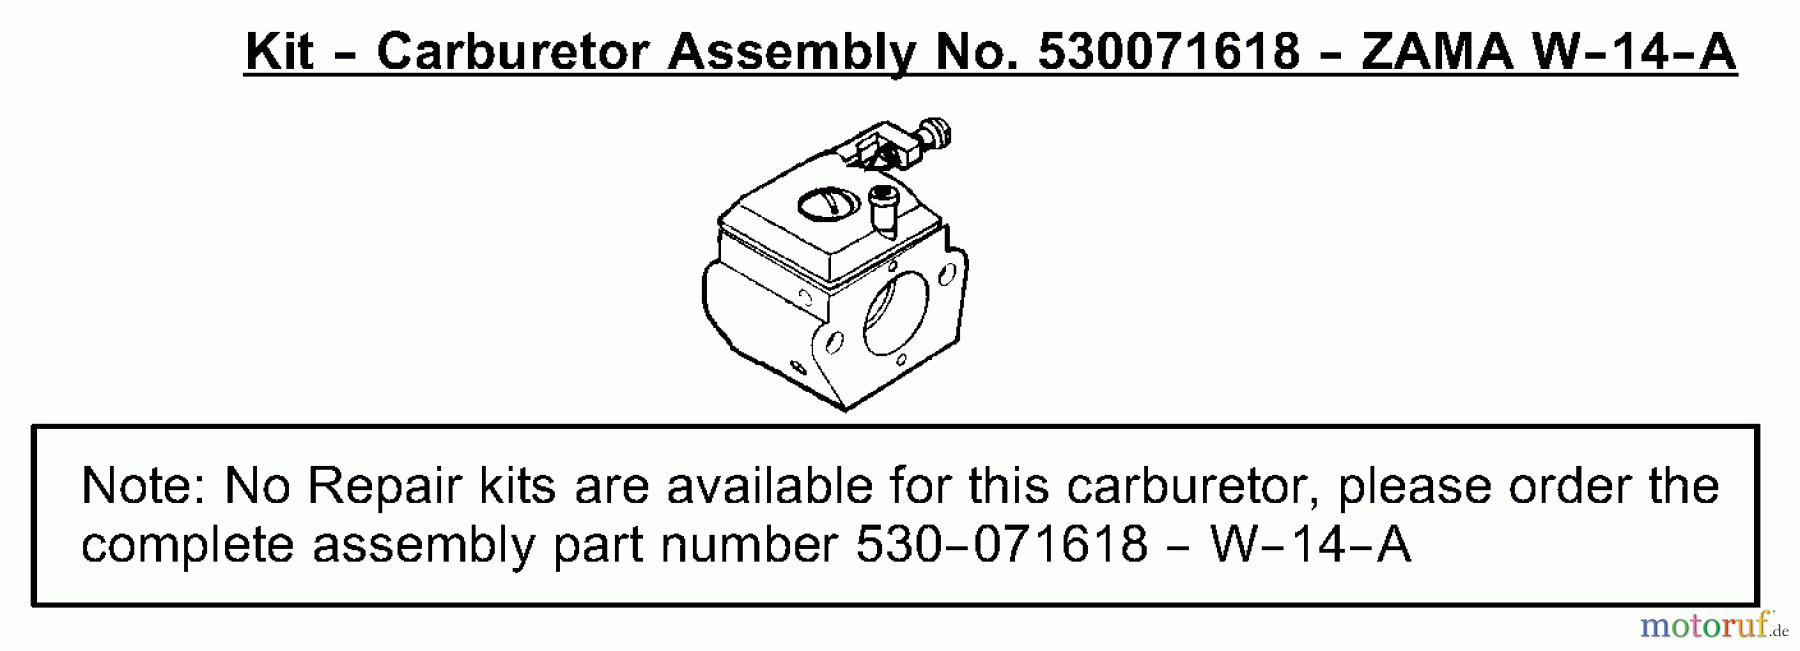  Poulan / Weed Eater Motorsägen 2155 (Type 5) - Poulan Plus Chainsaw Carburetor Assembly (Zama W-14-A) P/N 530071618